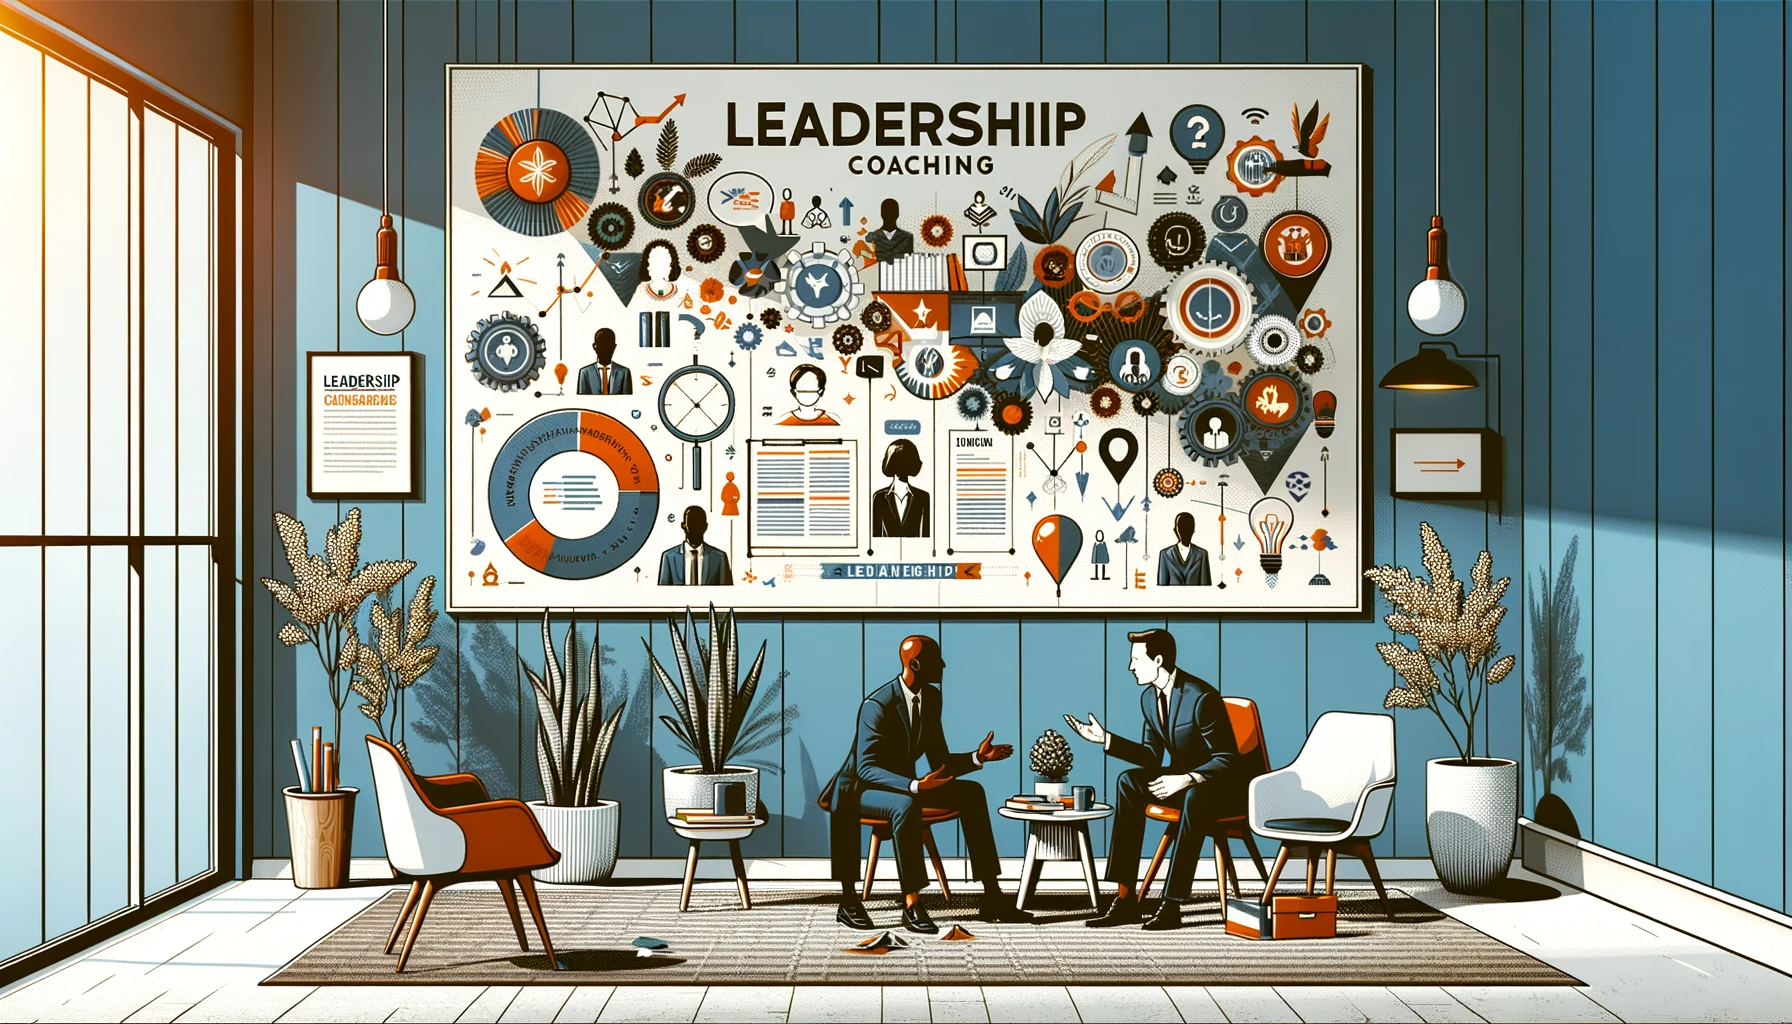 Leadership Coaching, dargestellt in einem modernen Bürokontext.